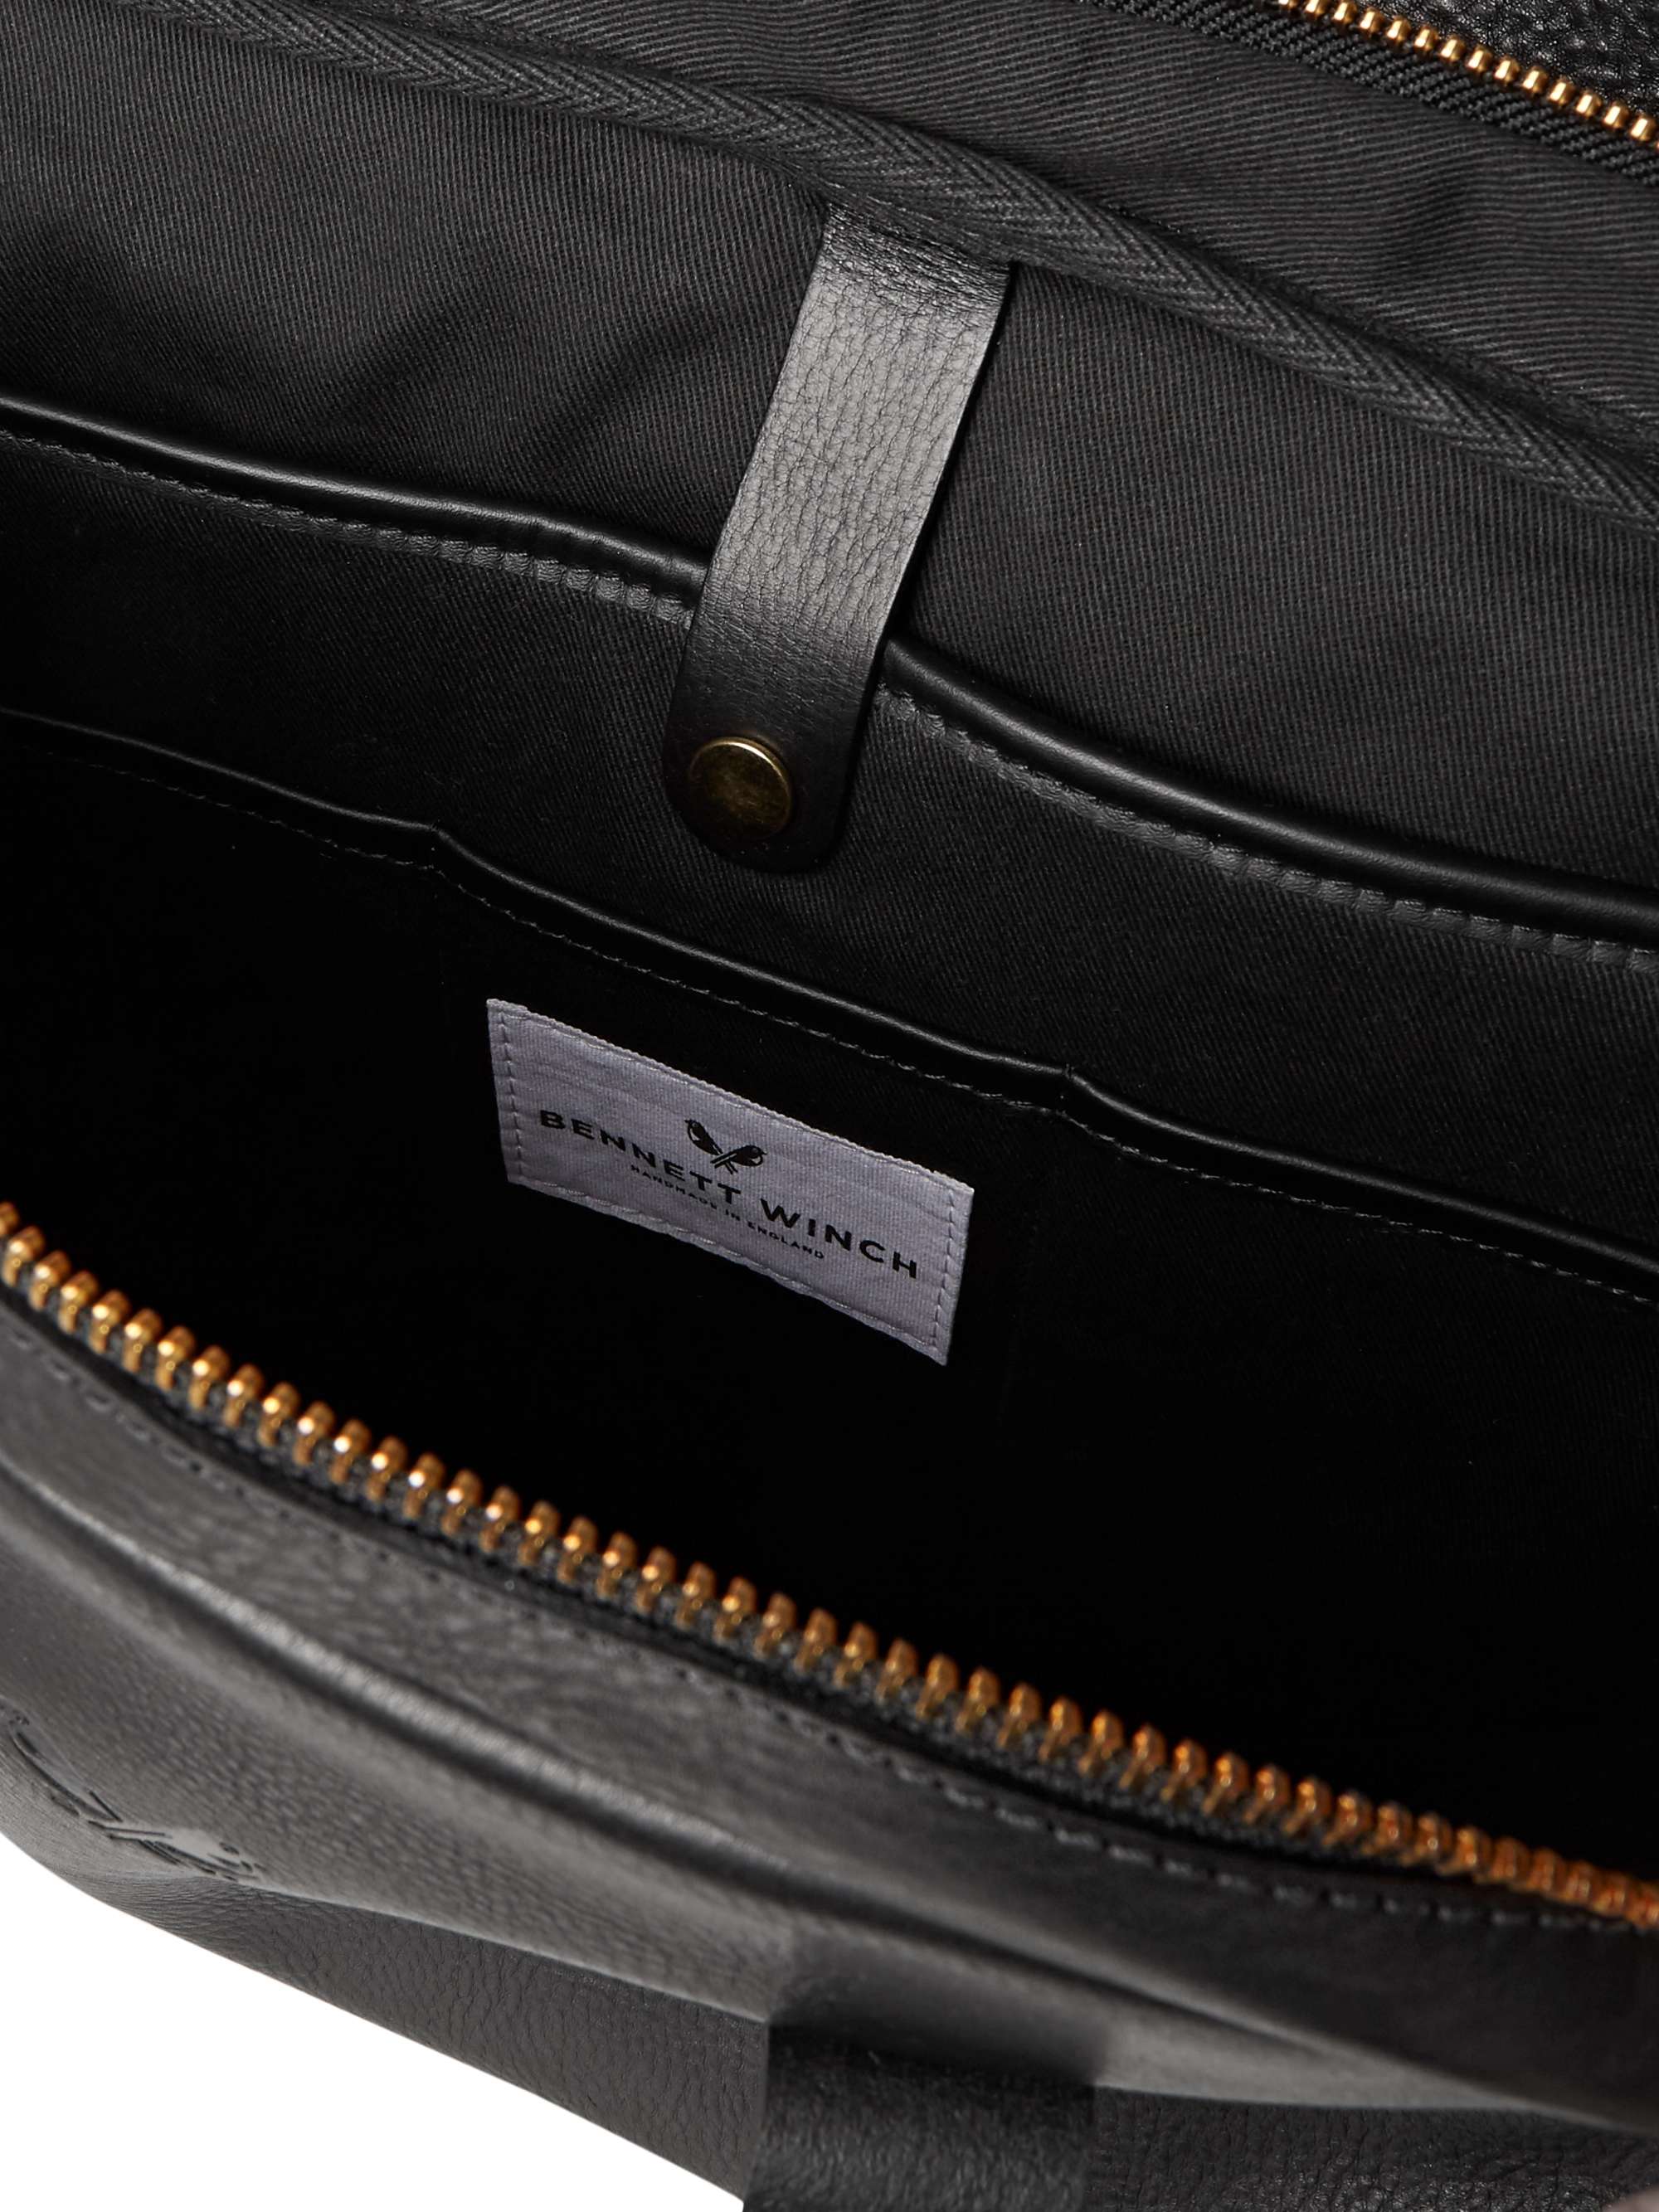 BENNETT WINCH Full-Grain Leather Briefcase